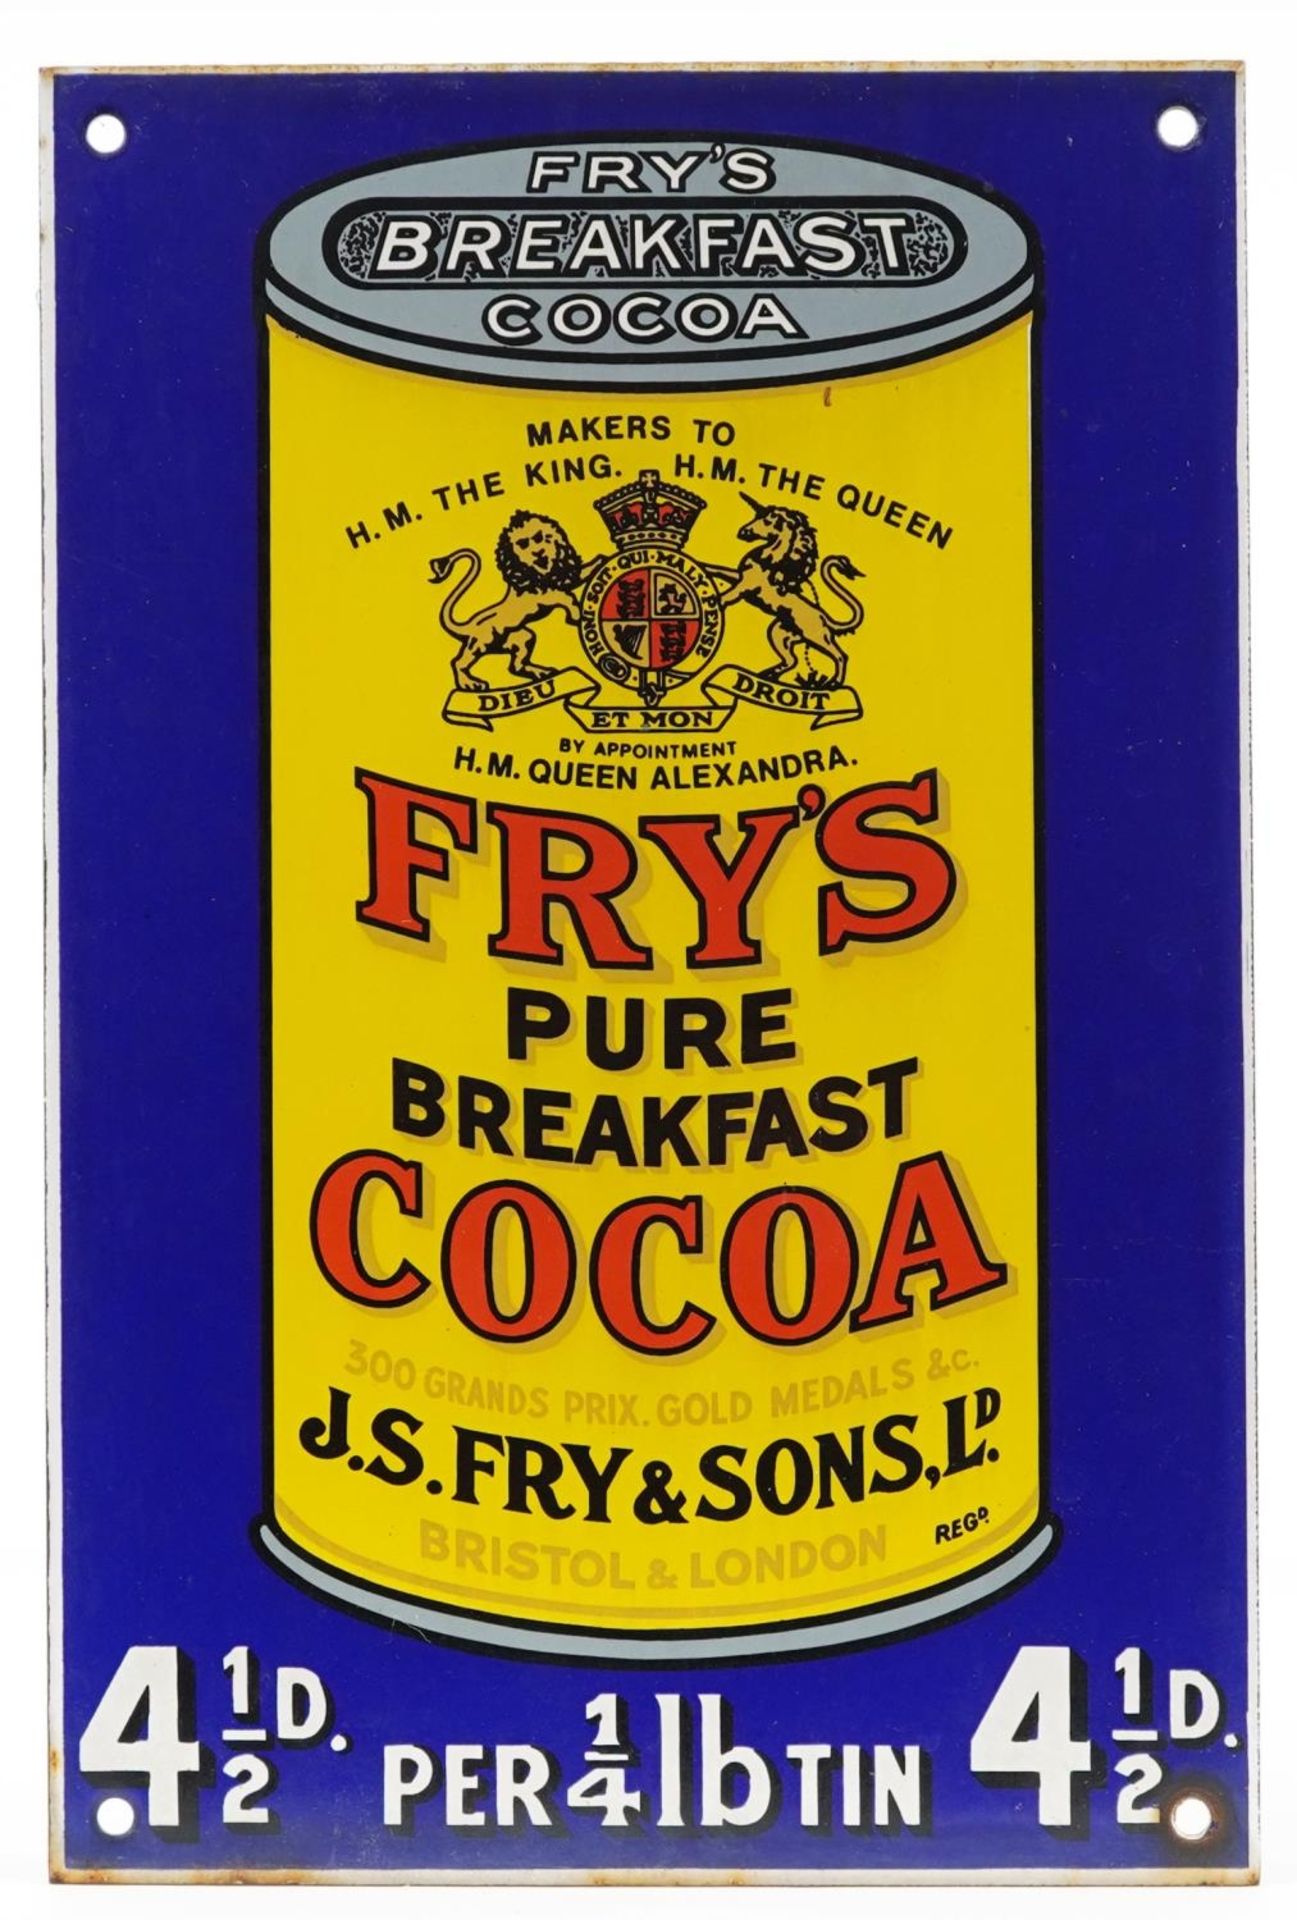 Fry's Pure Breakfast Cocoa enamel advertising sign, 27cm x 18cm